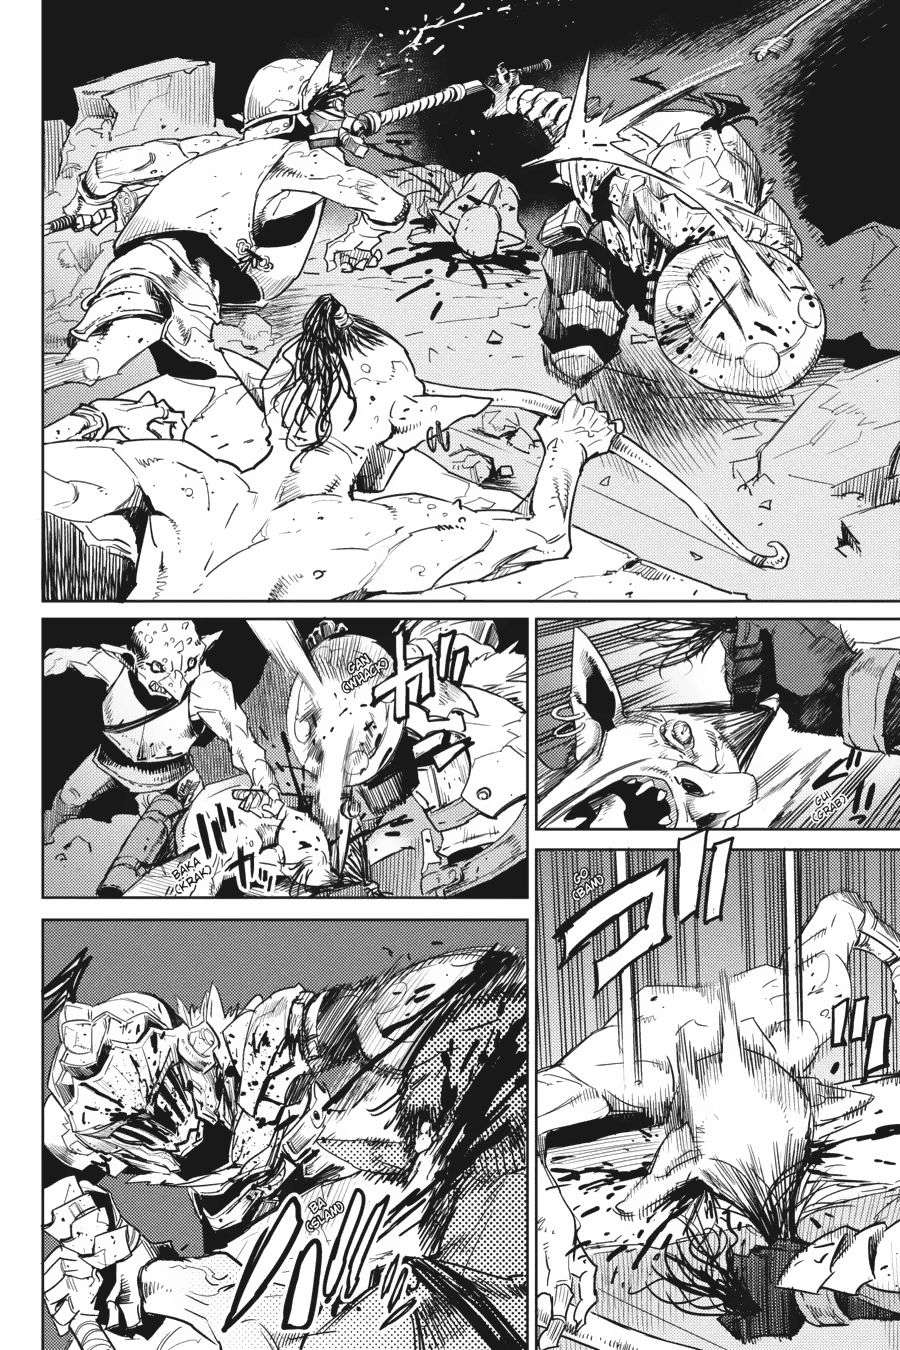 Goblin Slayer Chapter 27 Bahasa Indonesia